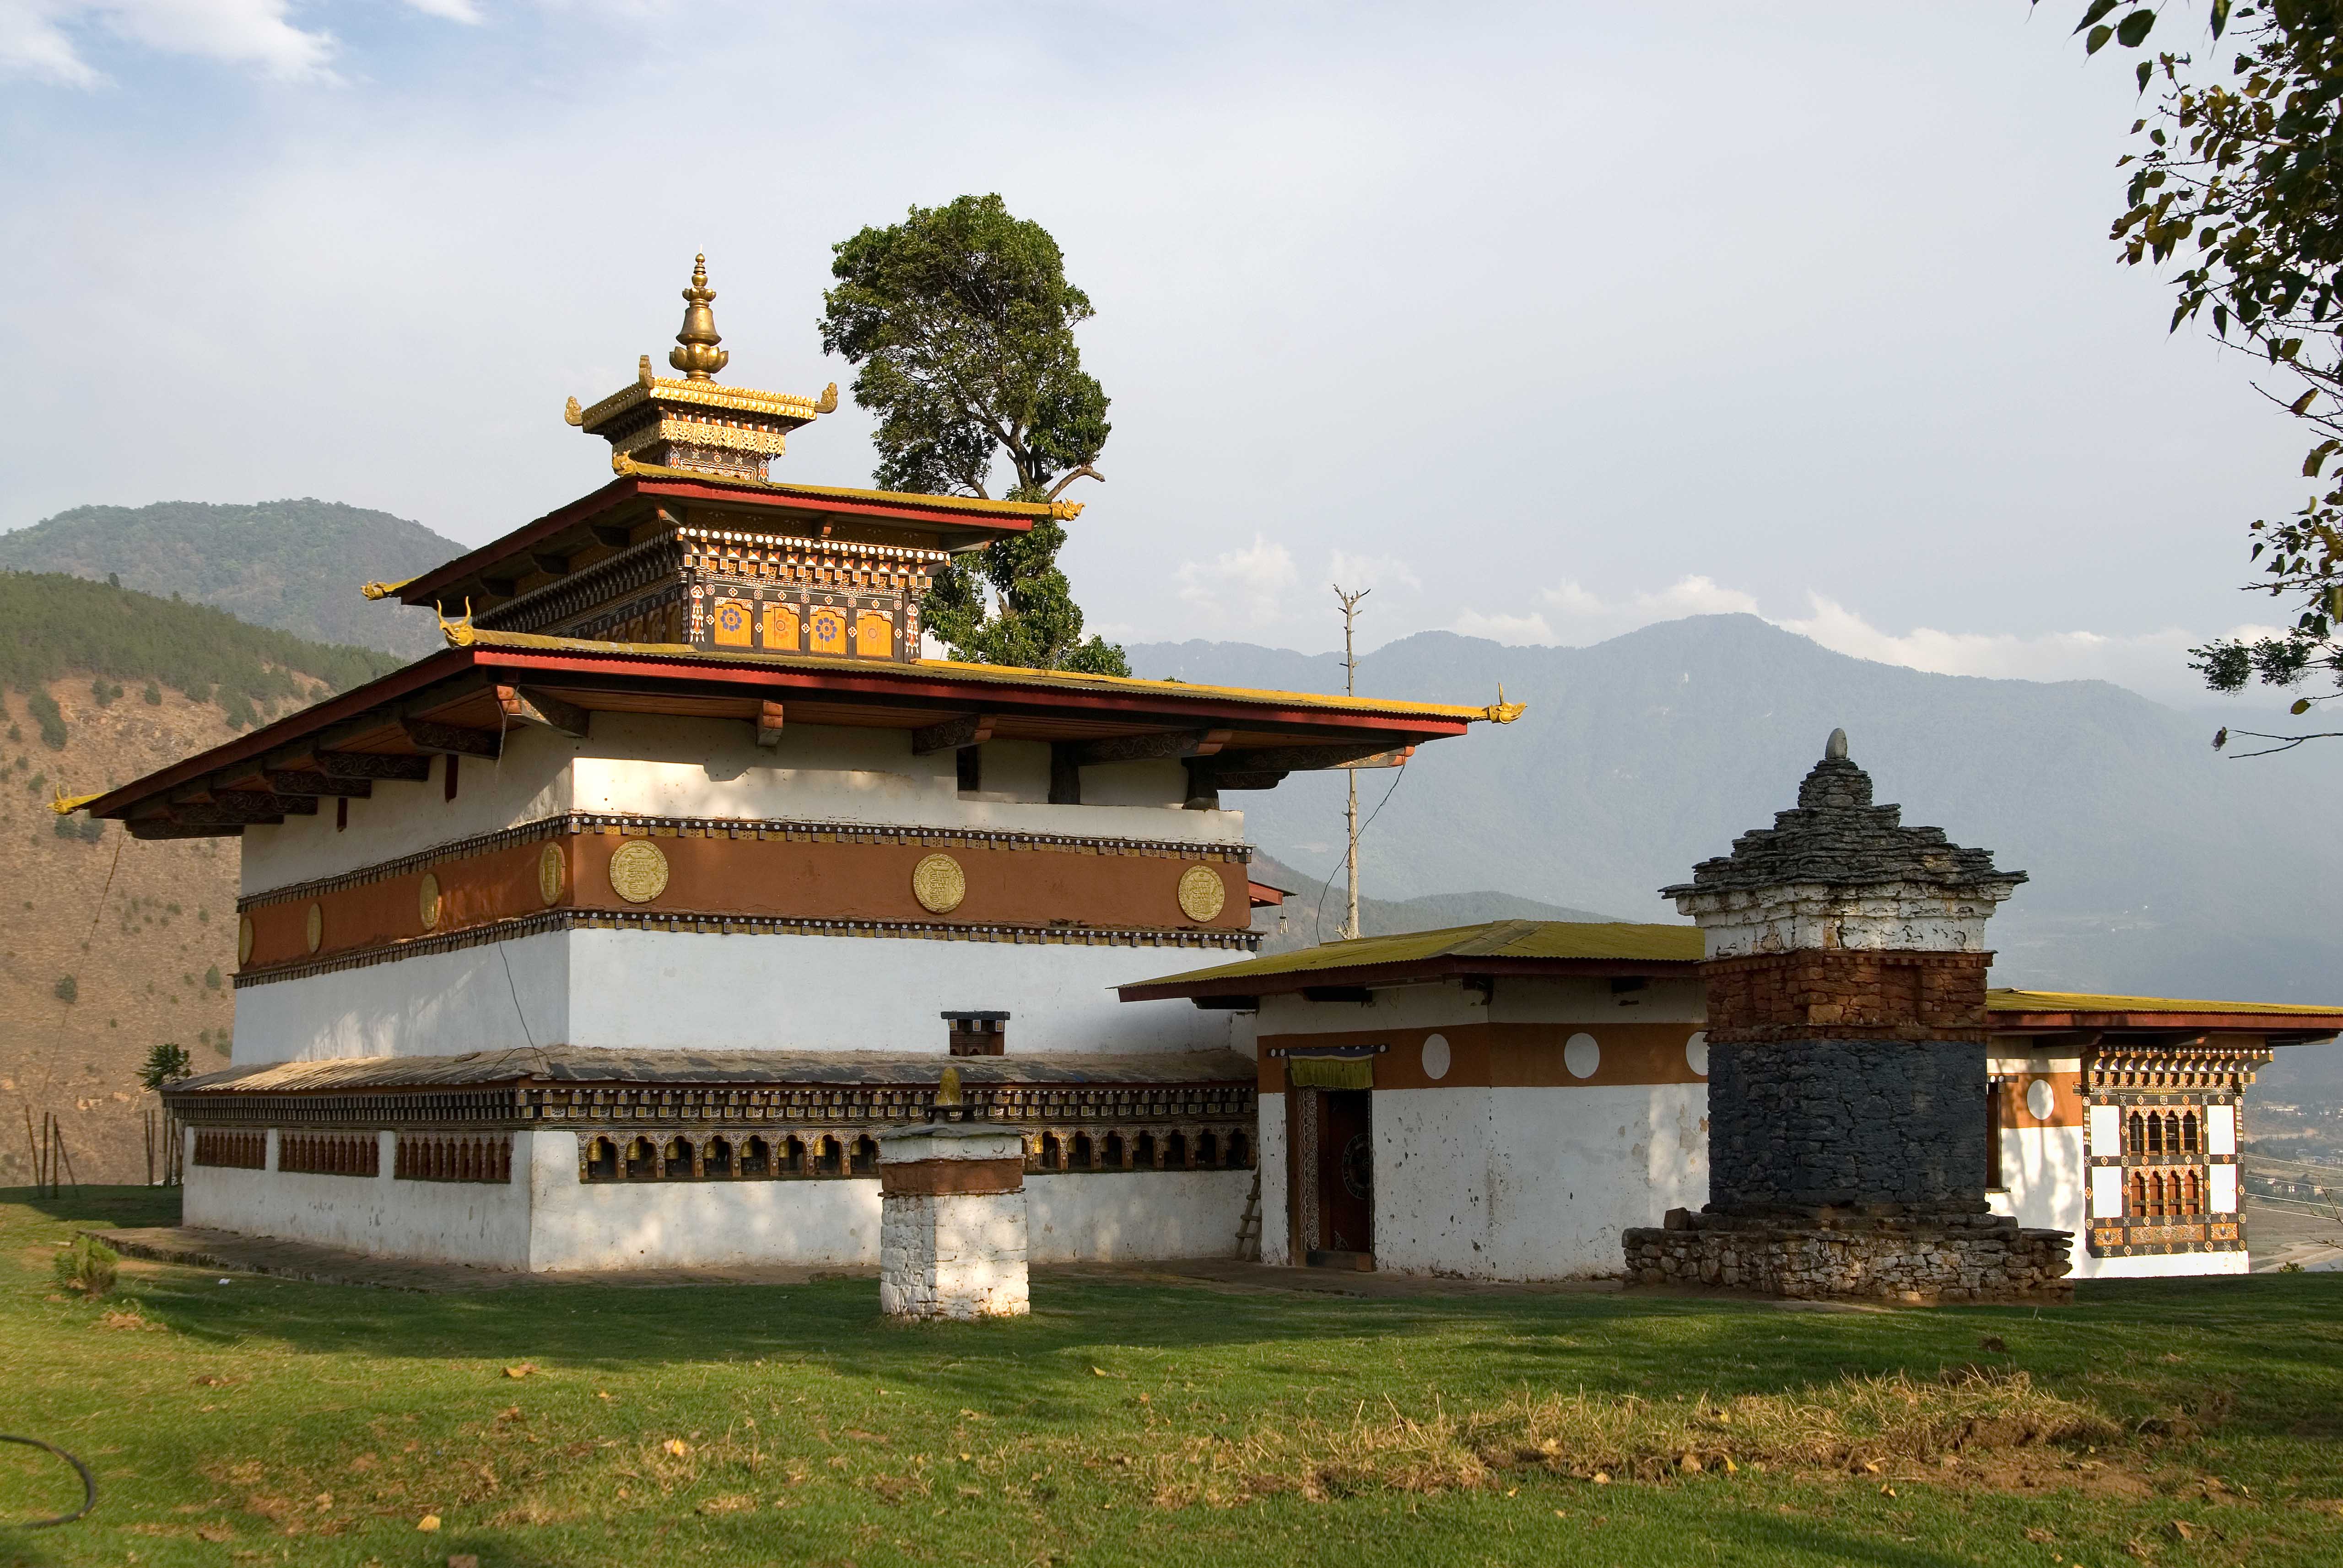 BHUTAN 4/ 2006 Chimi Lhakhang Temple is near Lobesa : built by Lama Drukpa Kunley (1455-1529) 